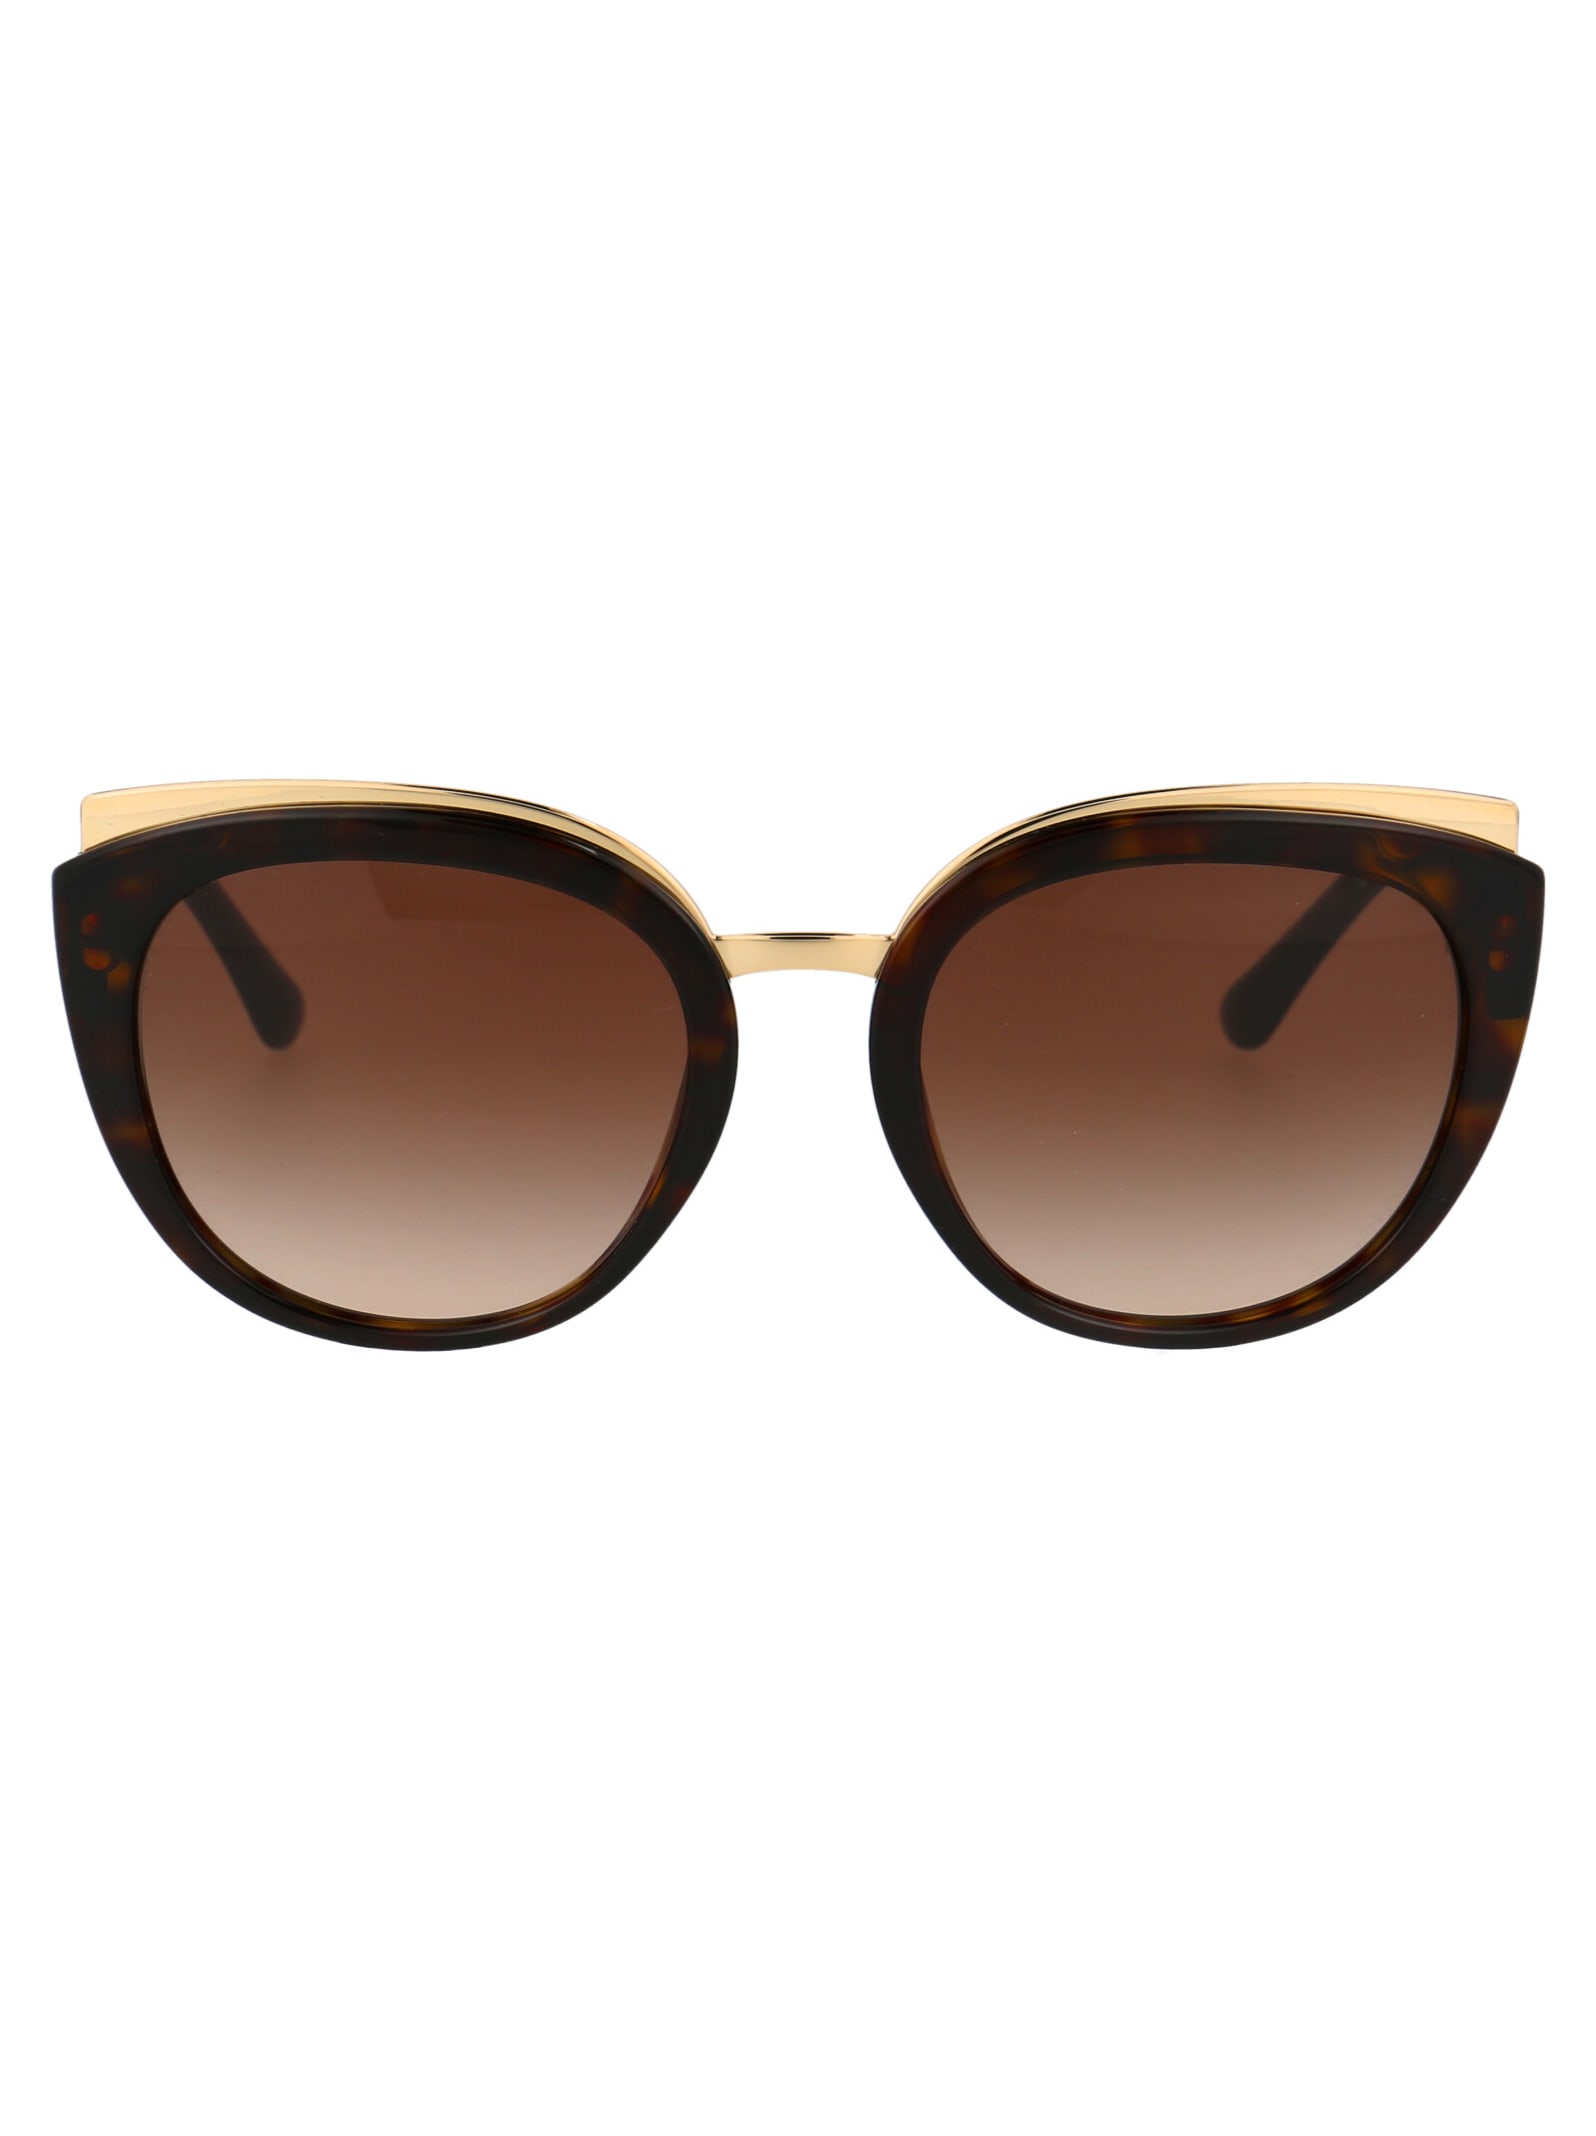 Dolce & Gabbana Eyewear 0dg4383 Sunglasses